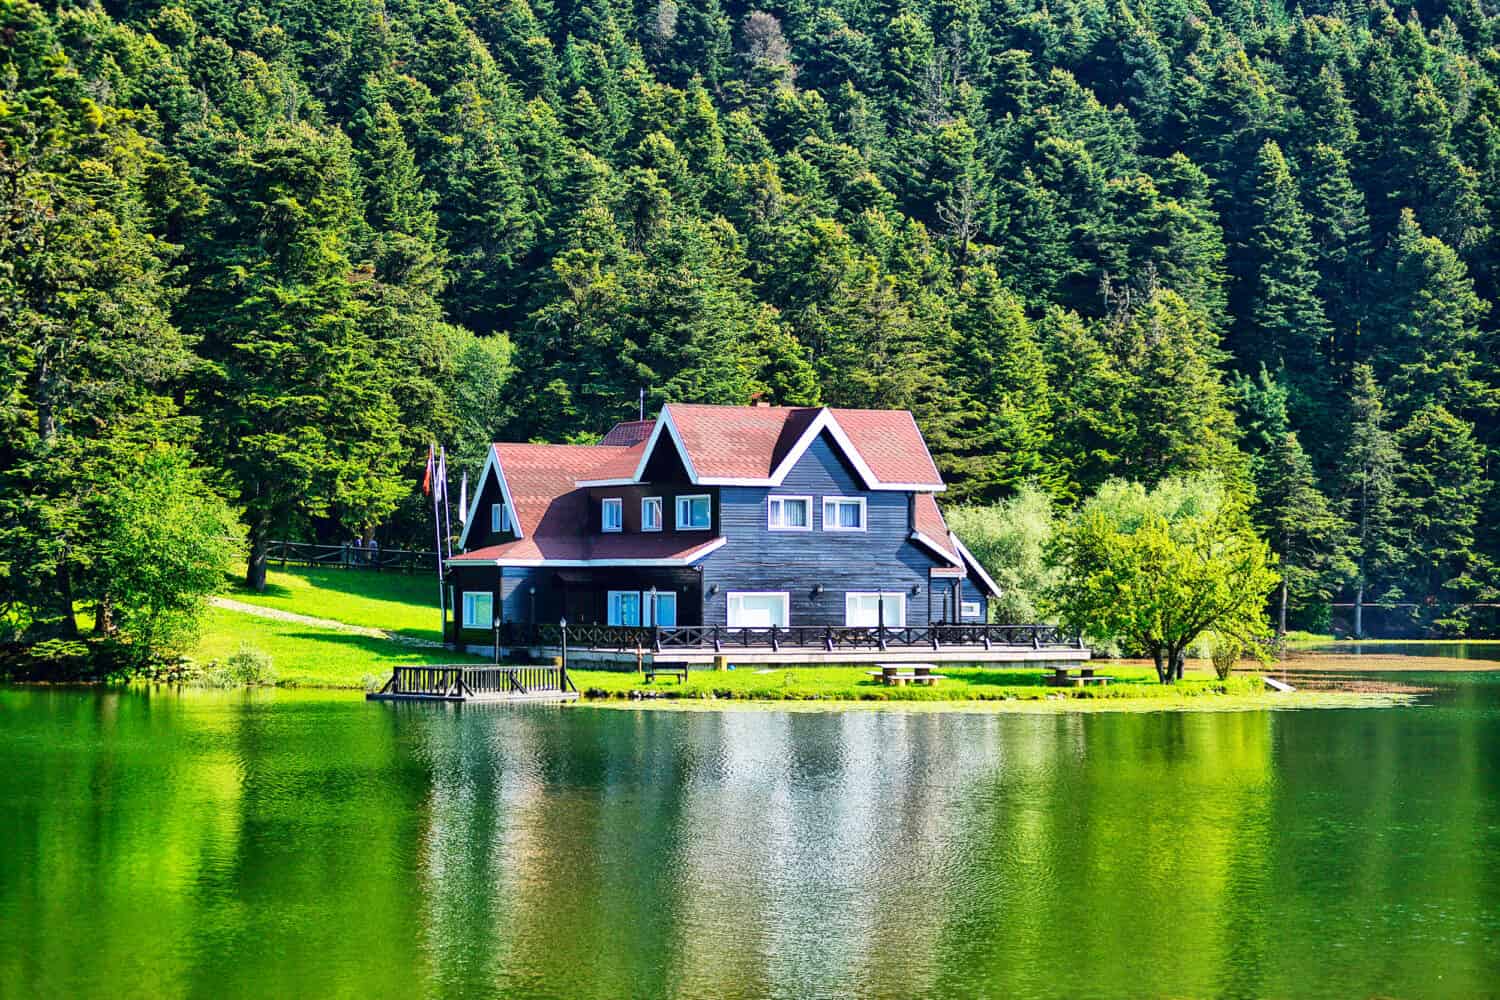 A beautiful lake home on a lake.